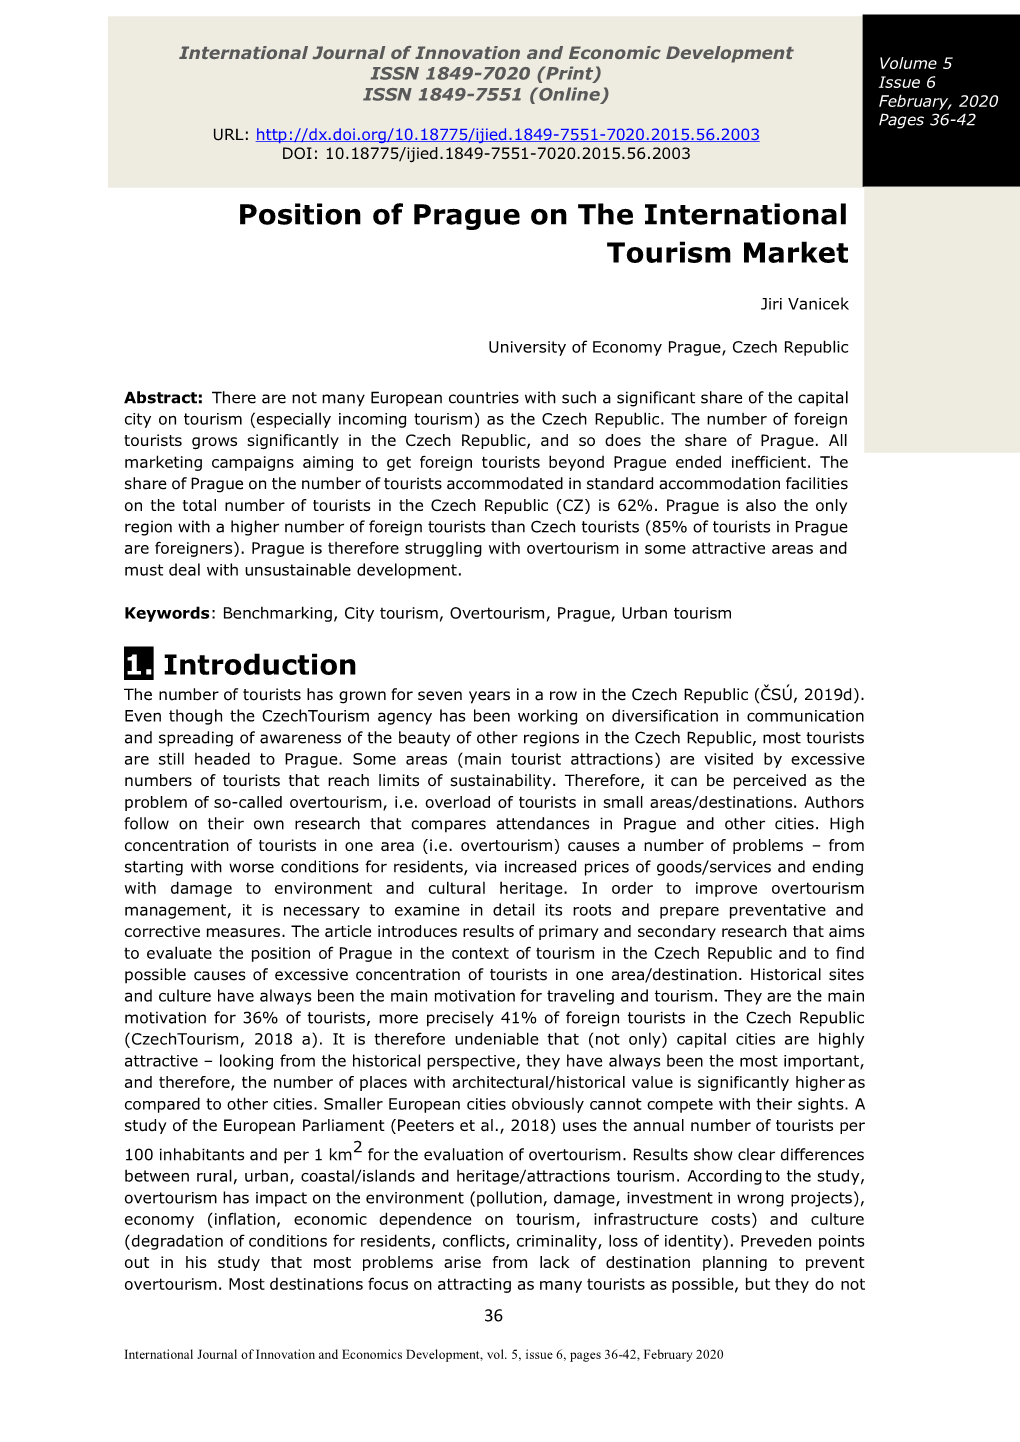 Position of Prague on the International Tourism Market 1